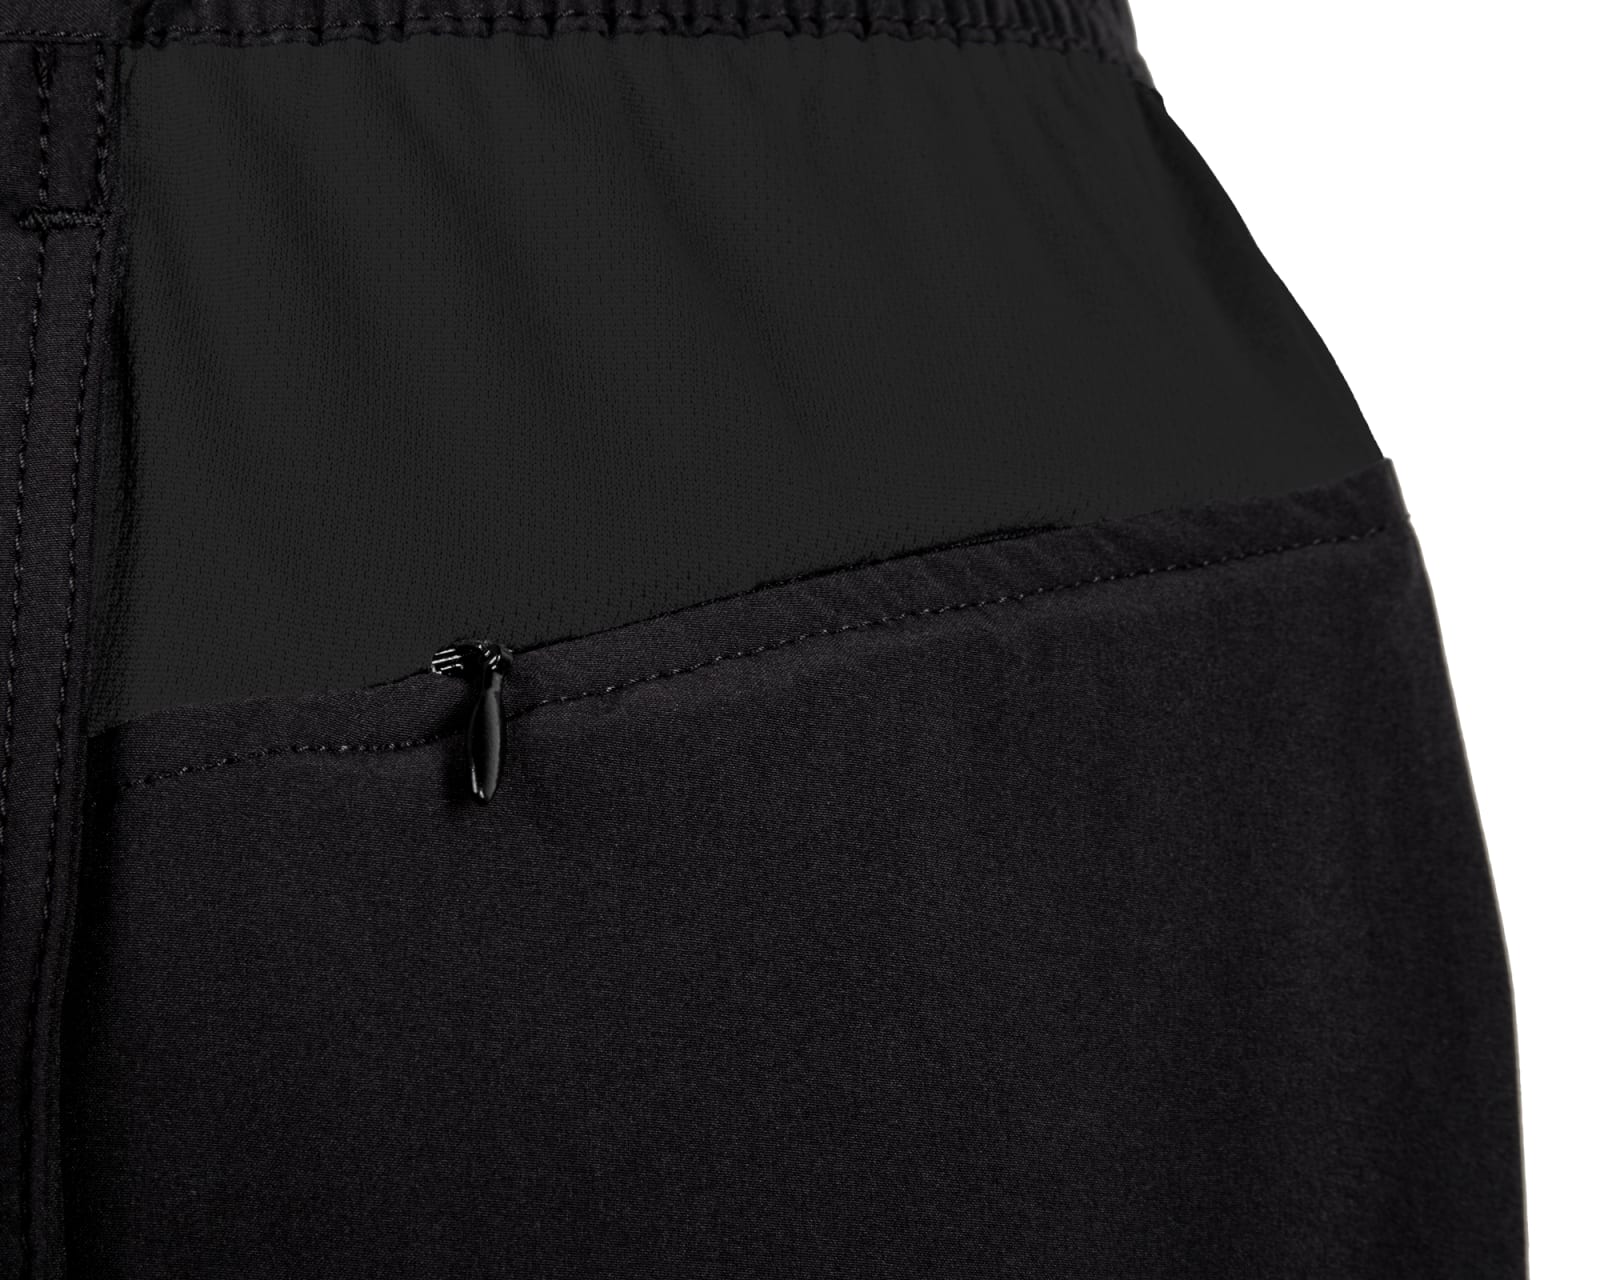 Rogue Black Ops Shorts 6 2.0 - Black